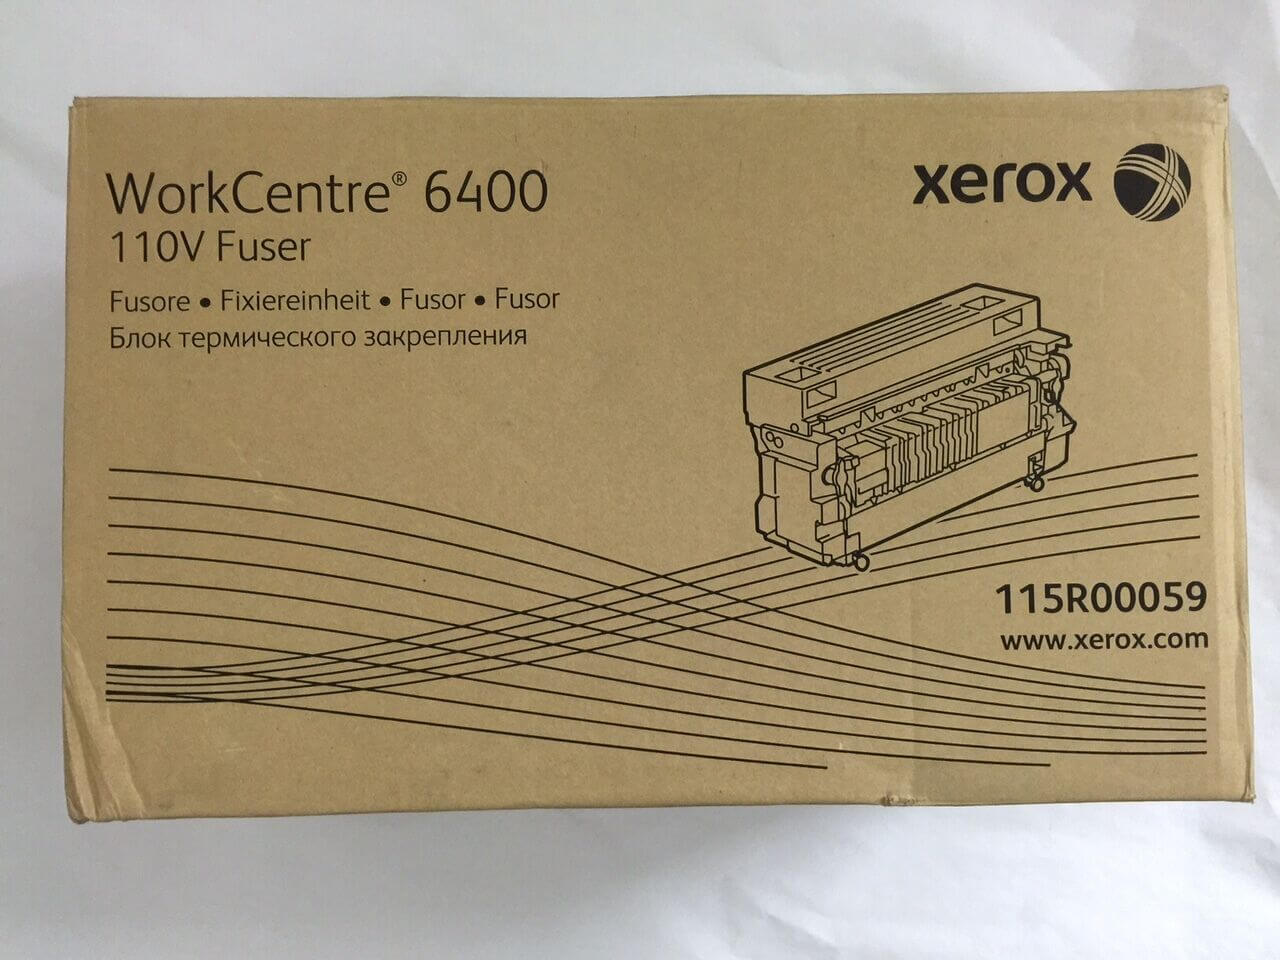 Open Box Genuine Xerox WorkCentre 6400 Fuser 110V - 115R00059 - FedEx 2Day Air!! - copier-clearance-center